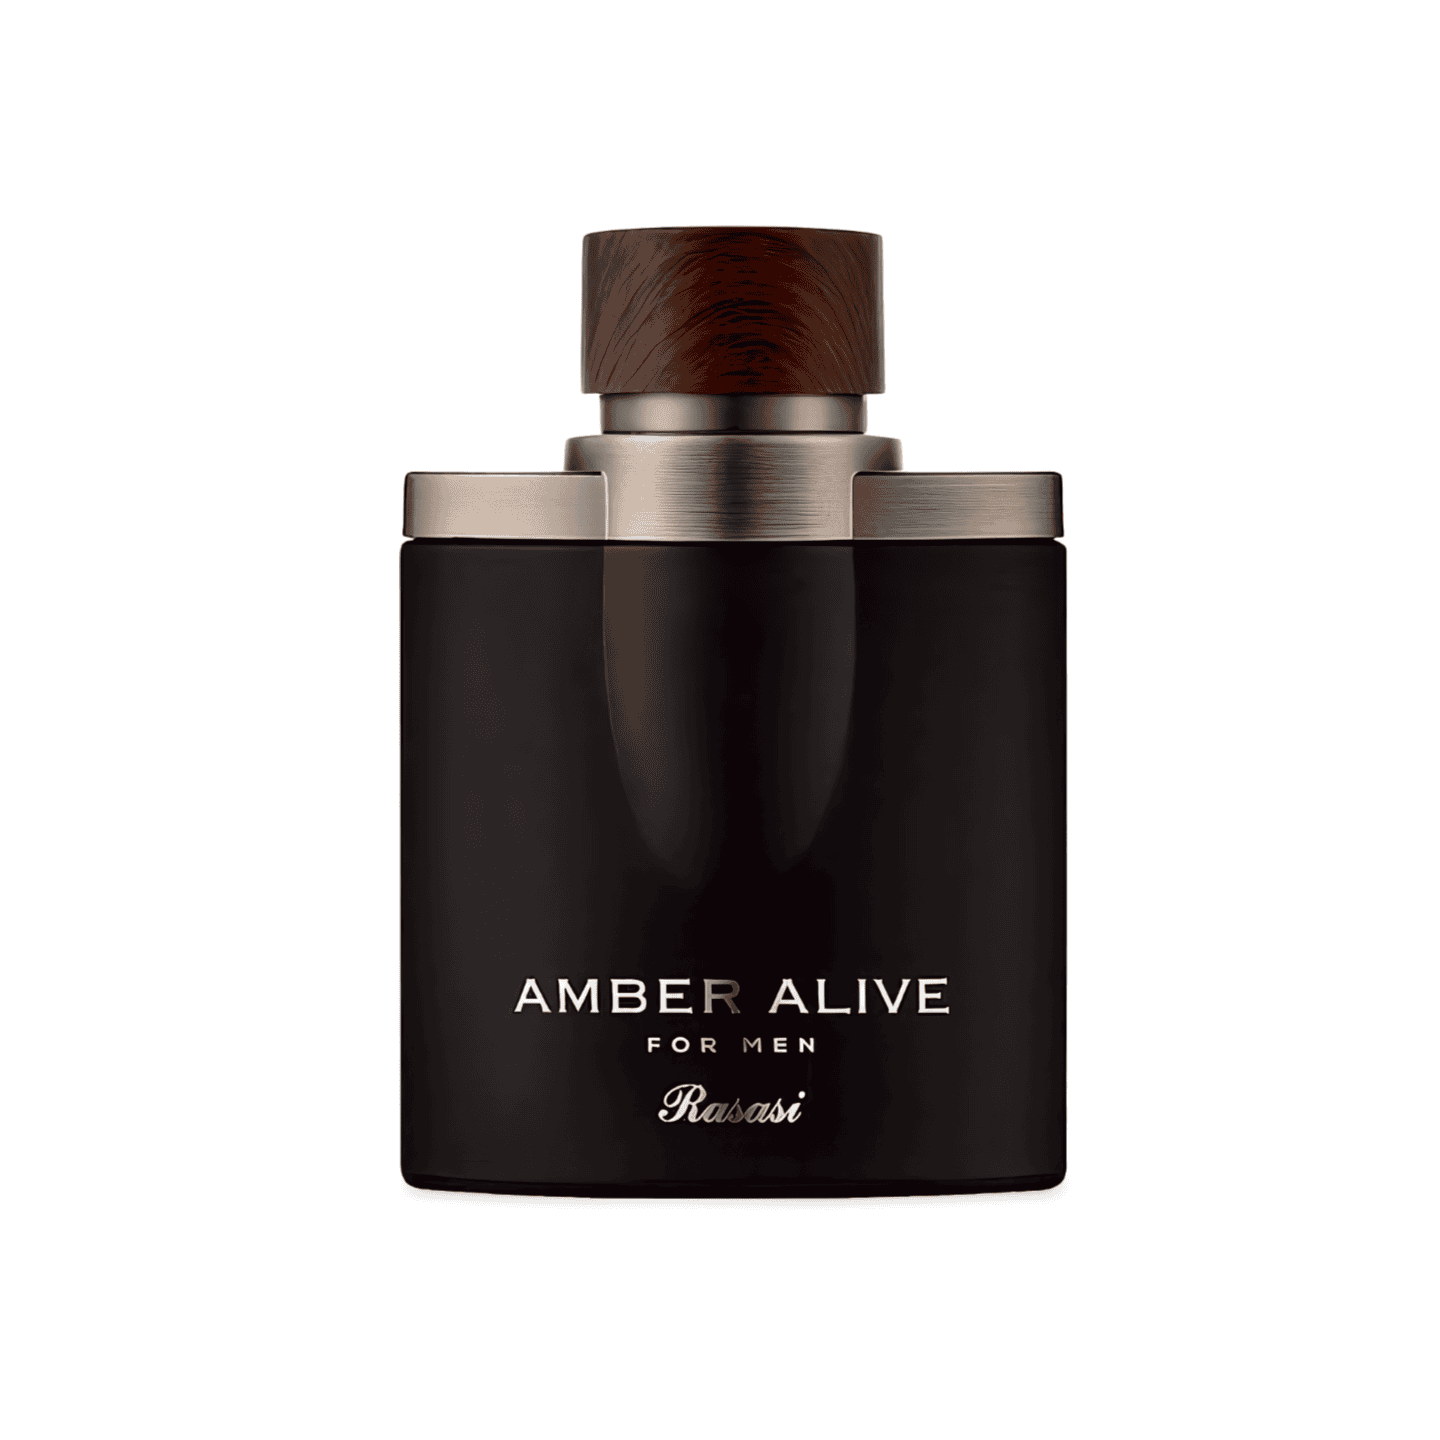 Rasasi Amber Alive Eau De Parfum